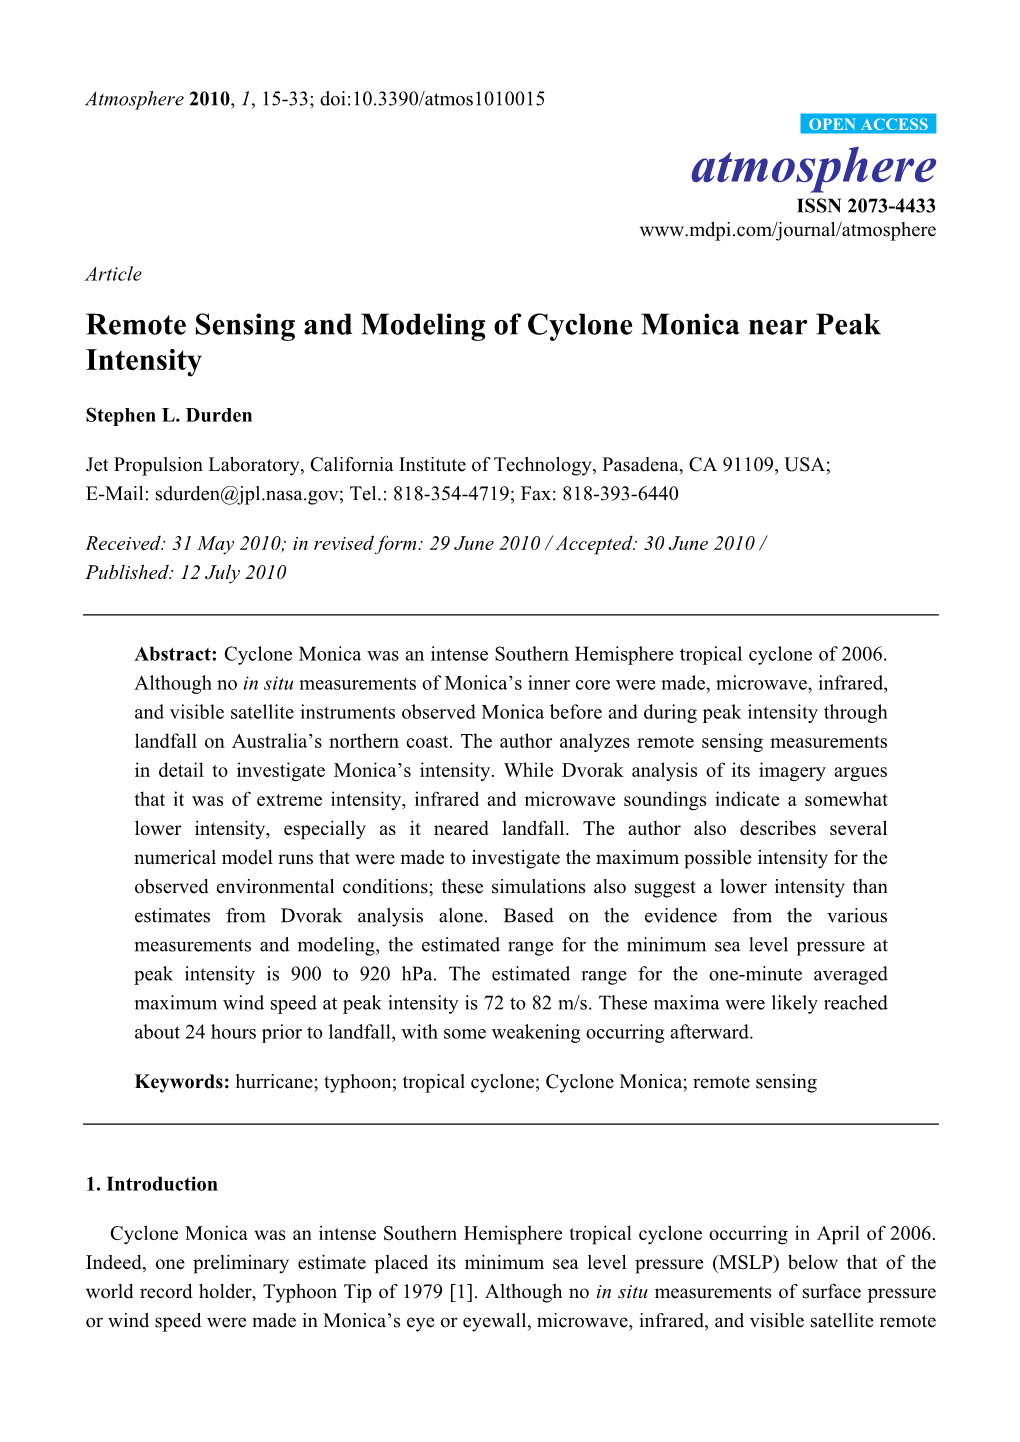 Remote Sensing and Modeling of Cyclone Monica Near Peak Intensity